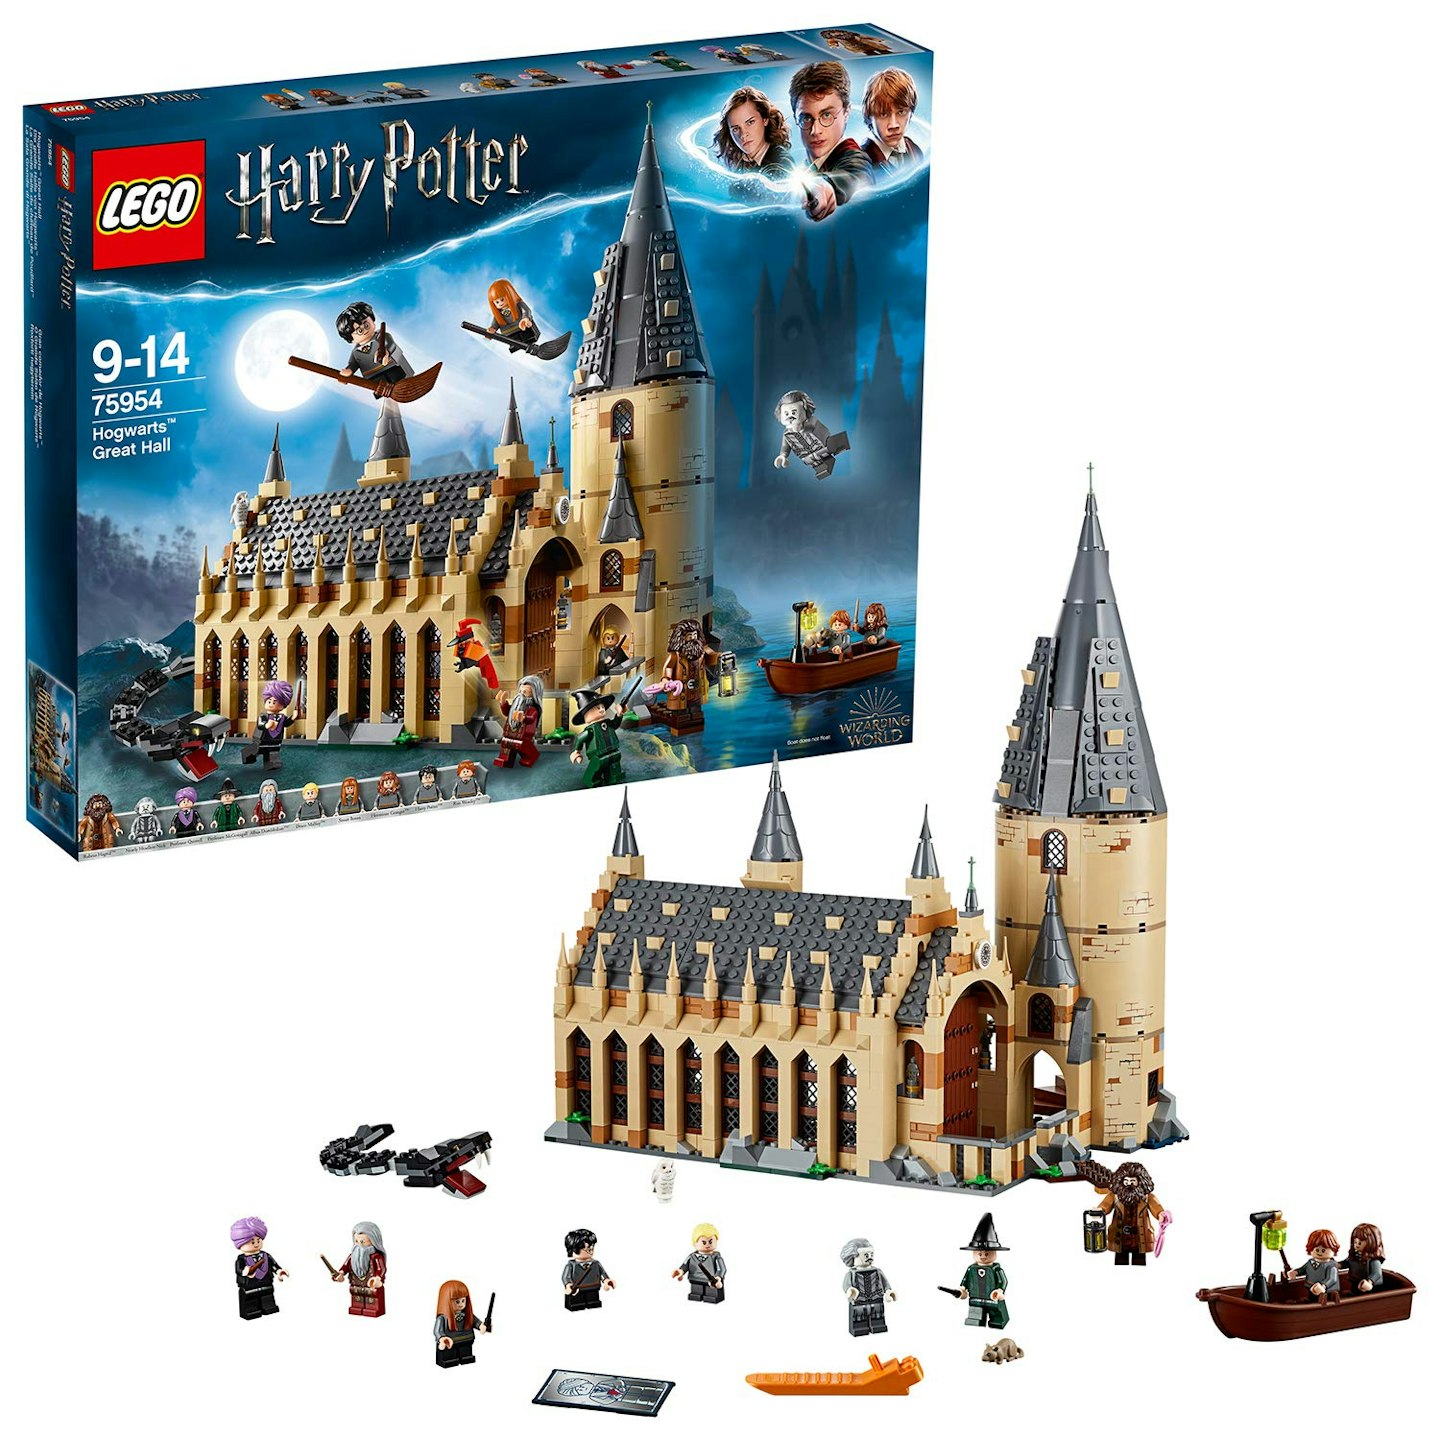 LEGO Harry Potter Hogwarts Great Hall, £65.69